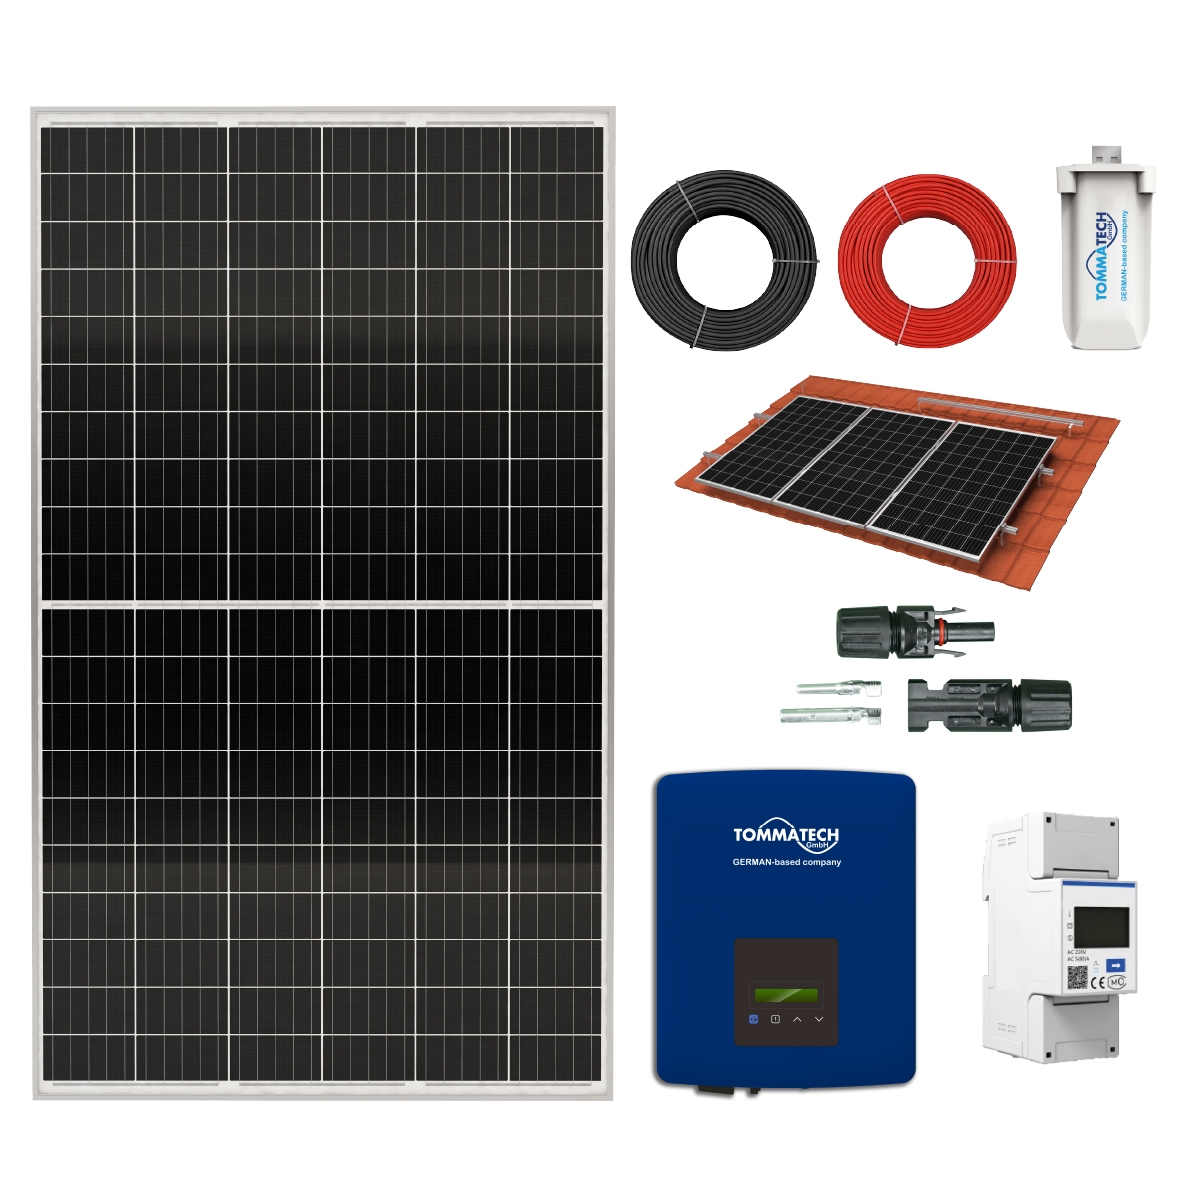 2kW / 2.66kWp Solar On-Grid Plug & Play Solution